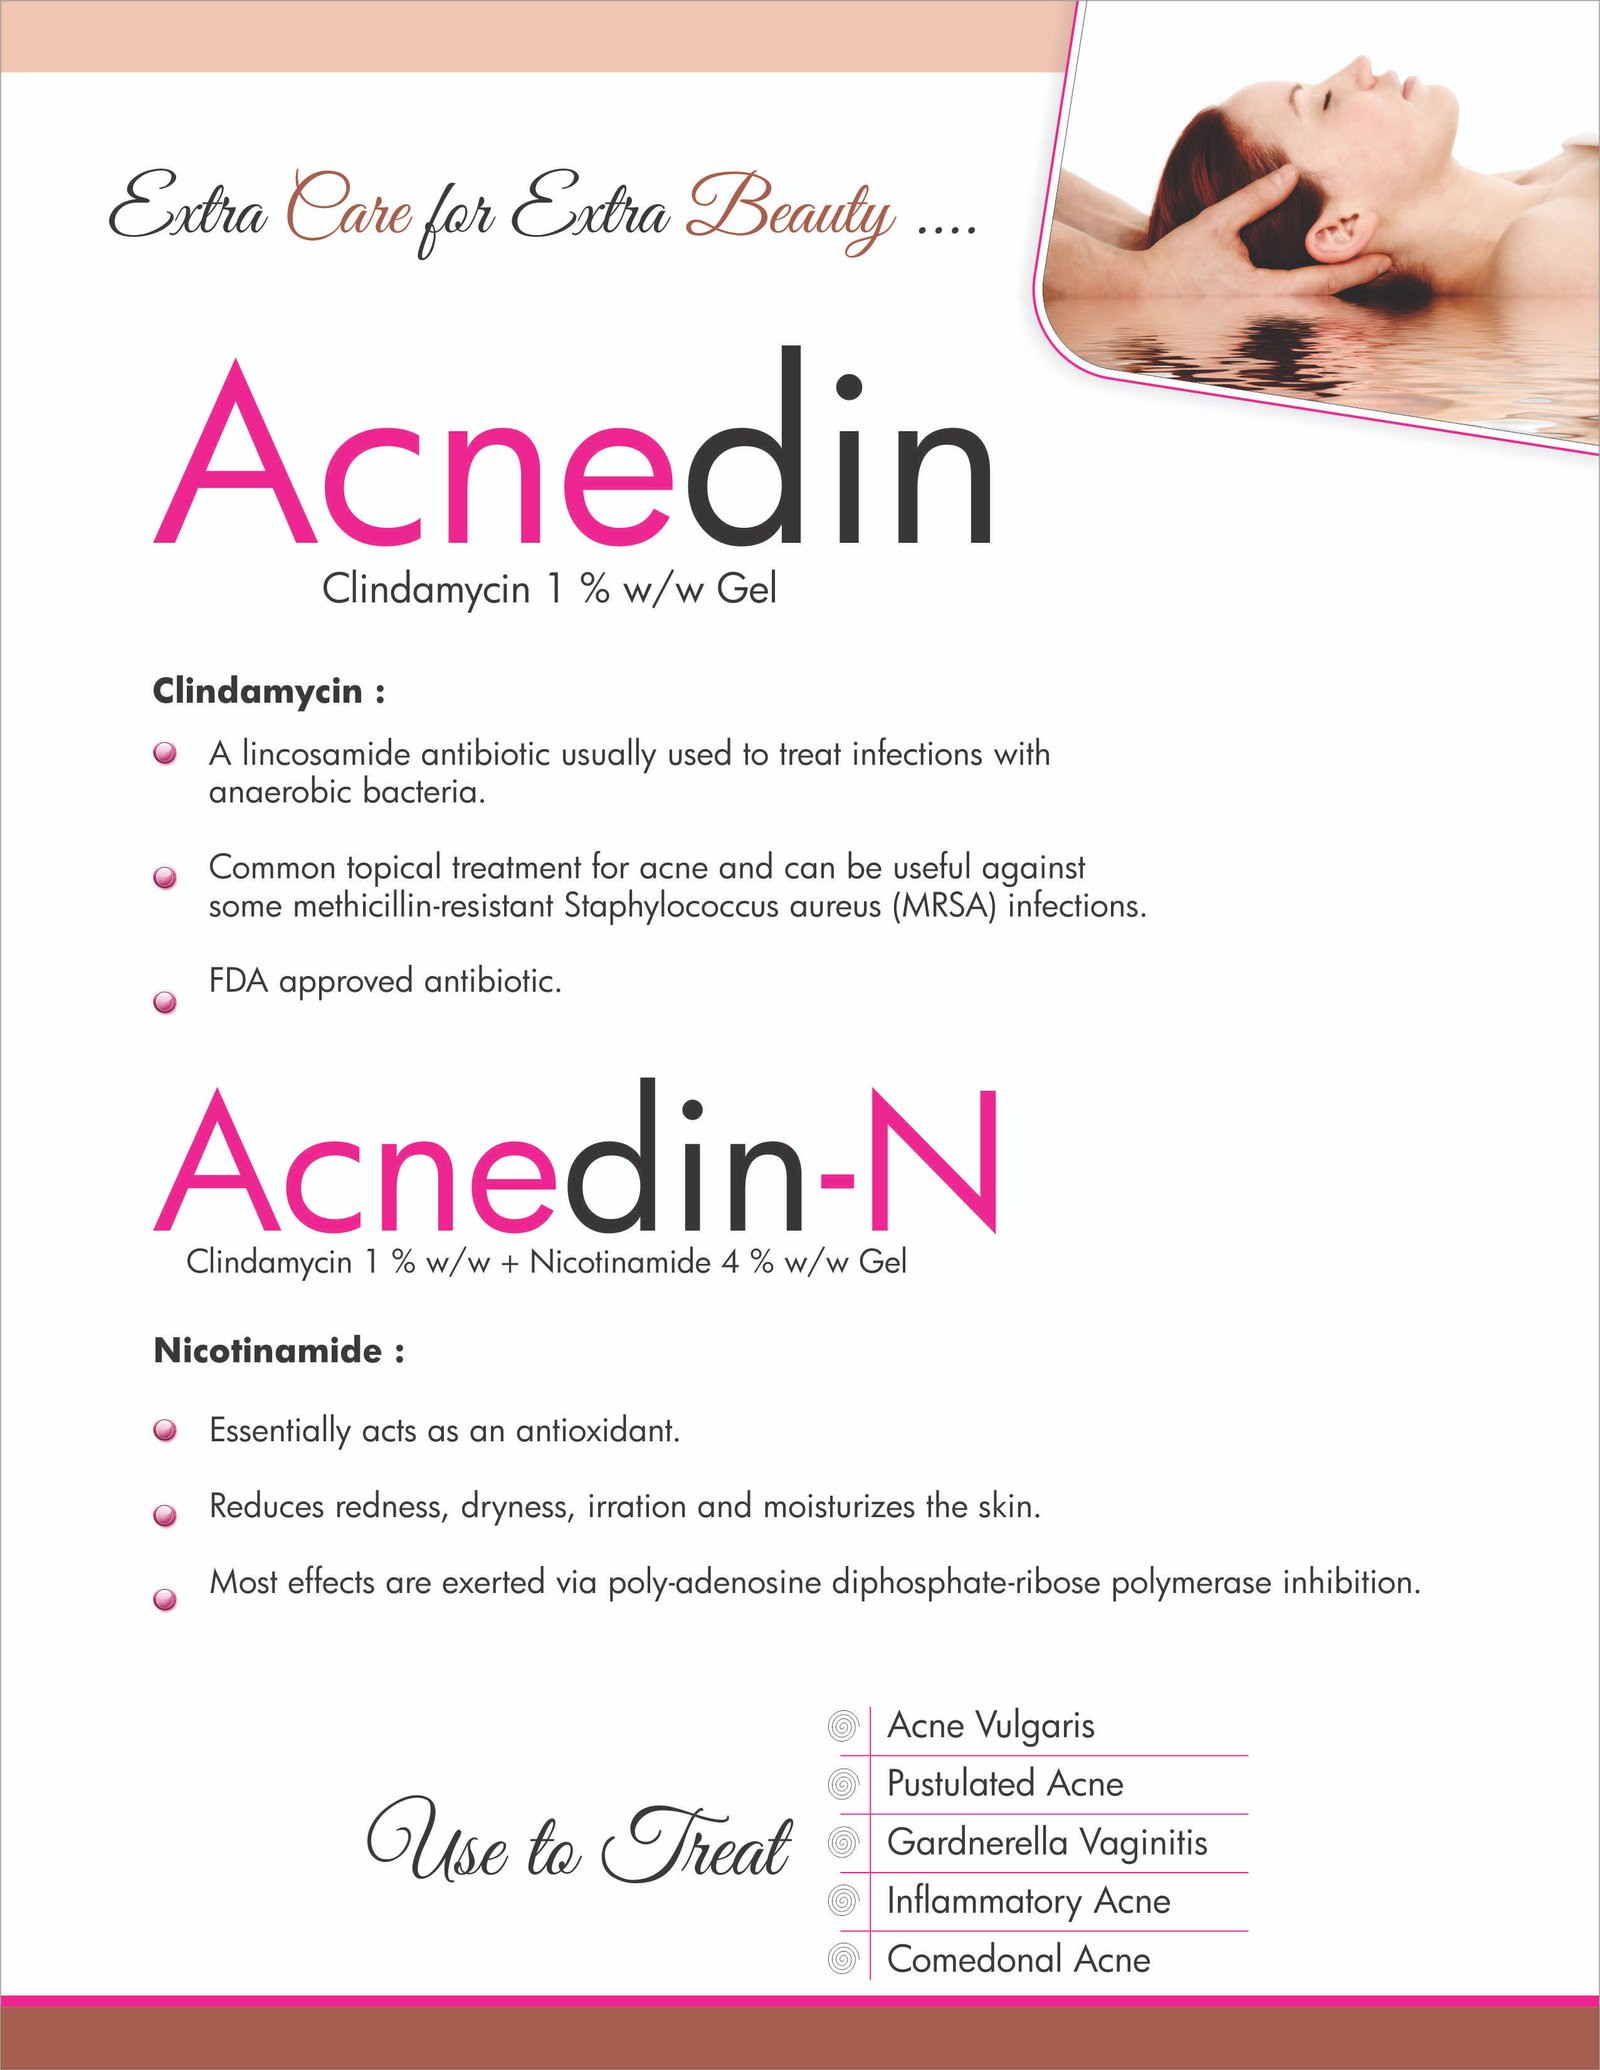 ACNEDIN, daksh pharmaceuticals, daksh pharmaceuticals panchkula, acnedin, anti-allergic